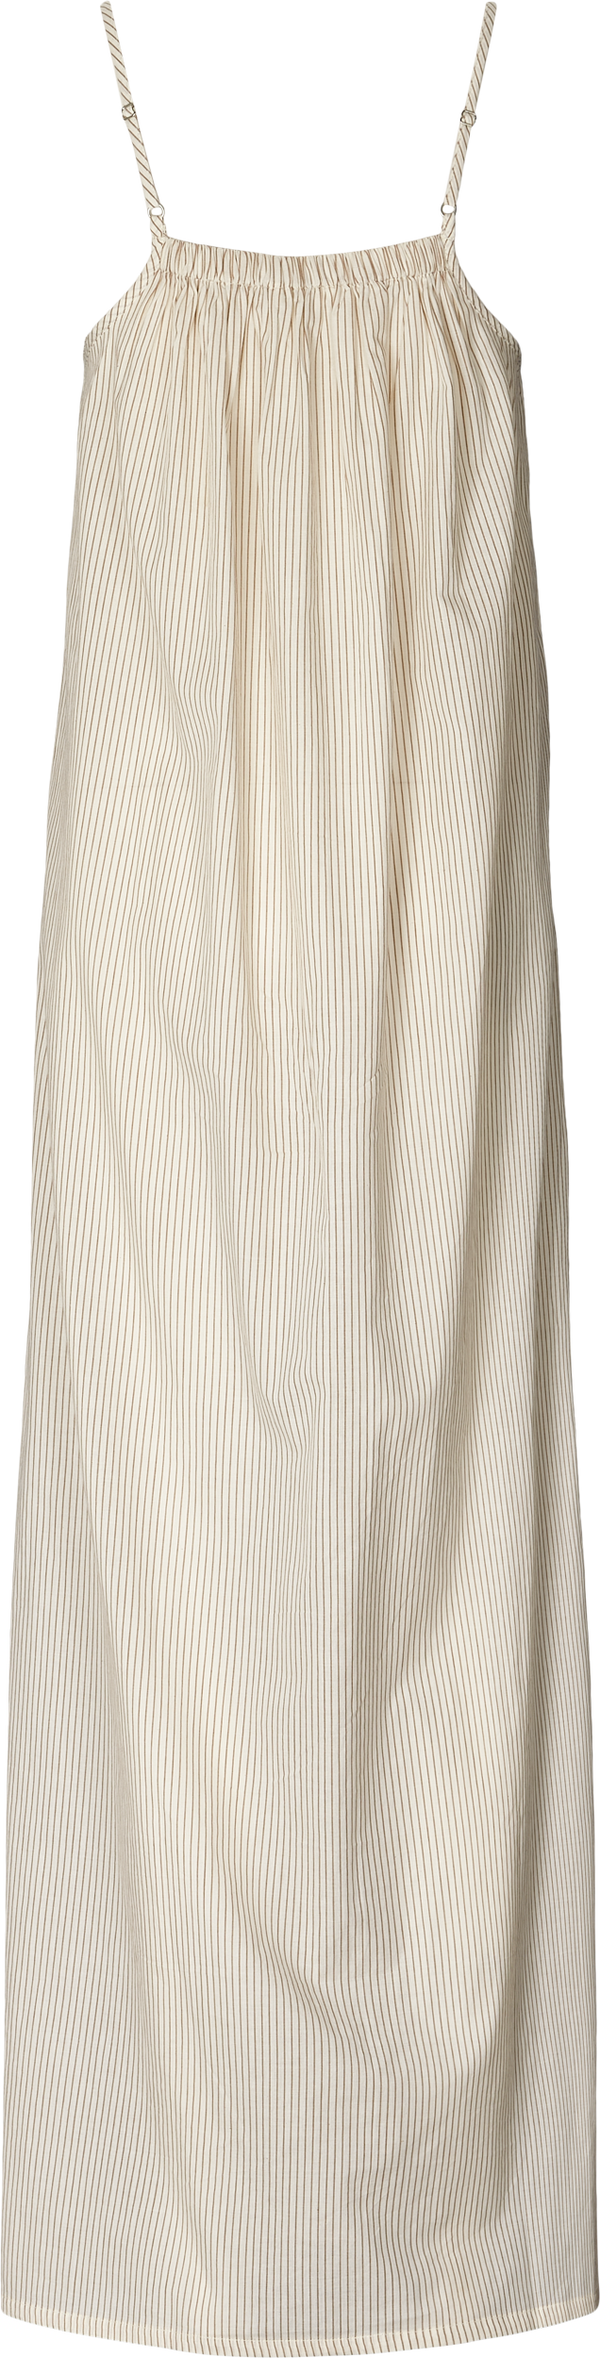 GAI+LISVA Julia Dress Cotton Stripe Dresses & Skirts 178 Brown Mustard